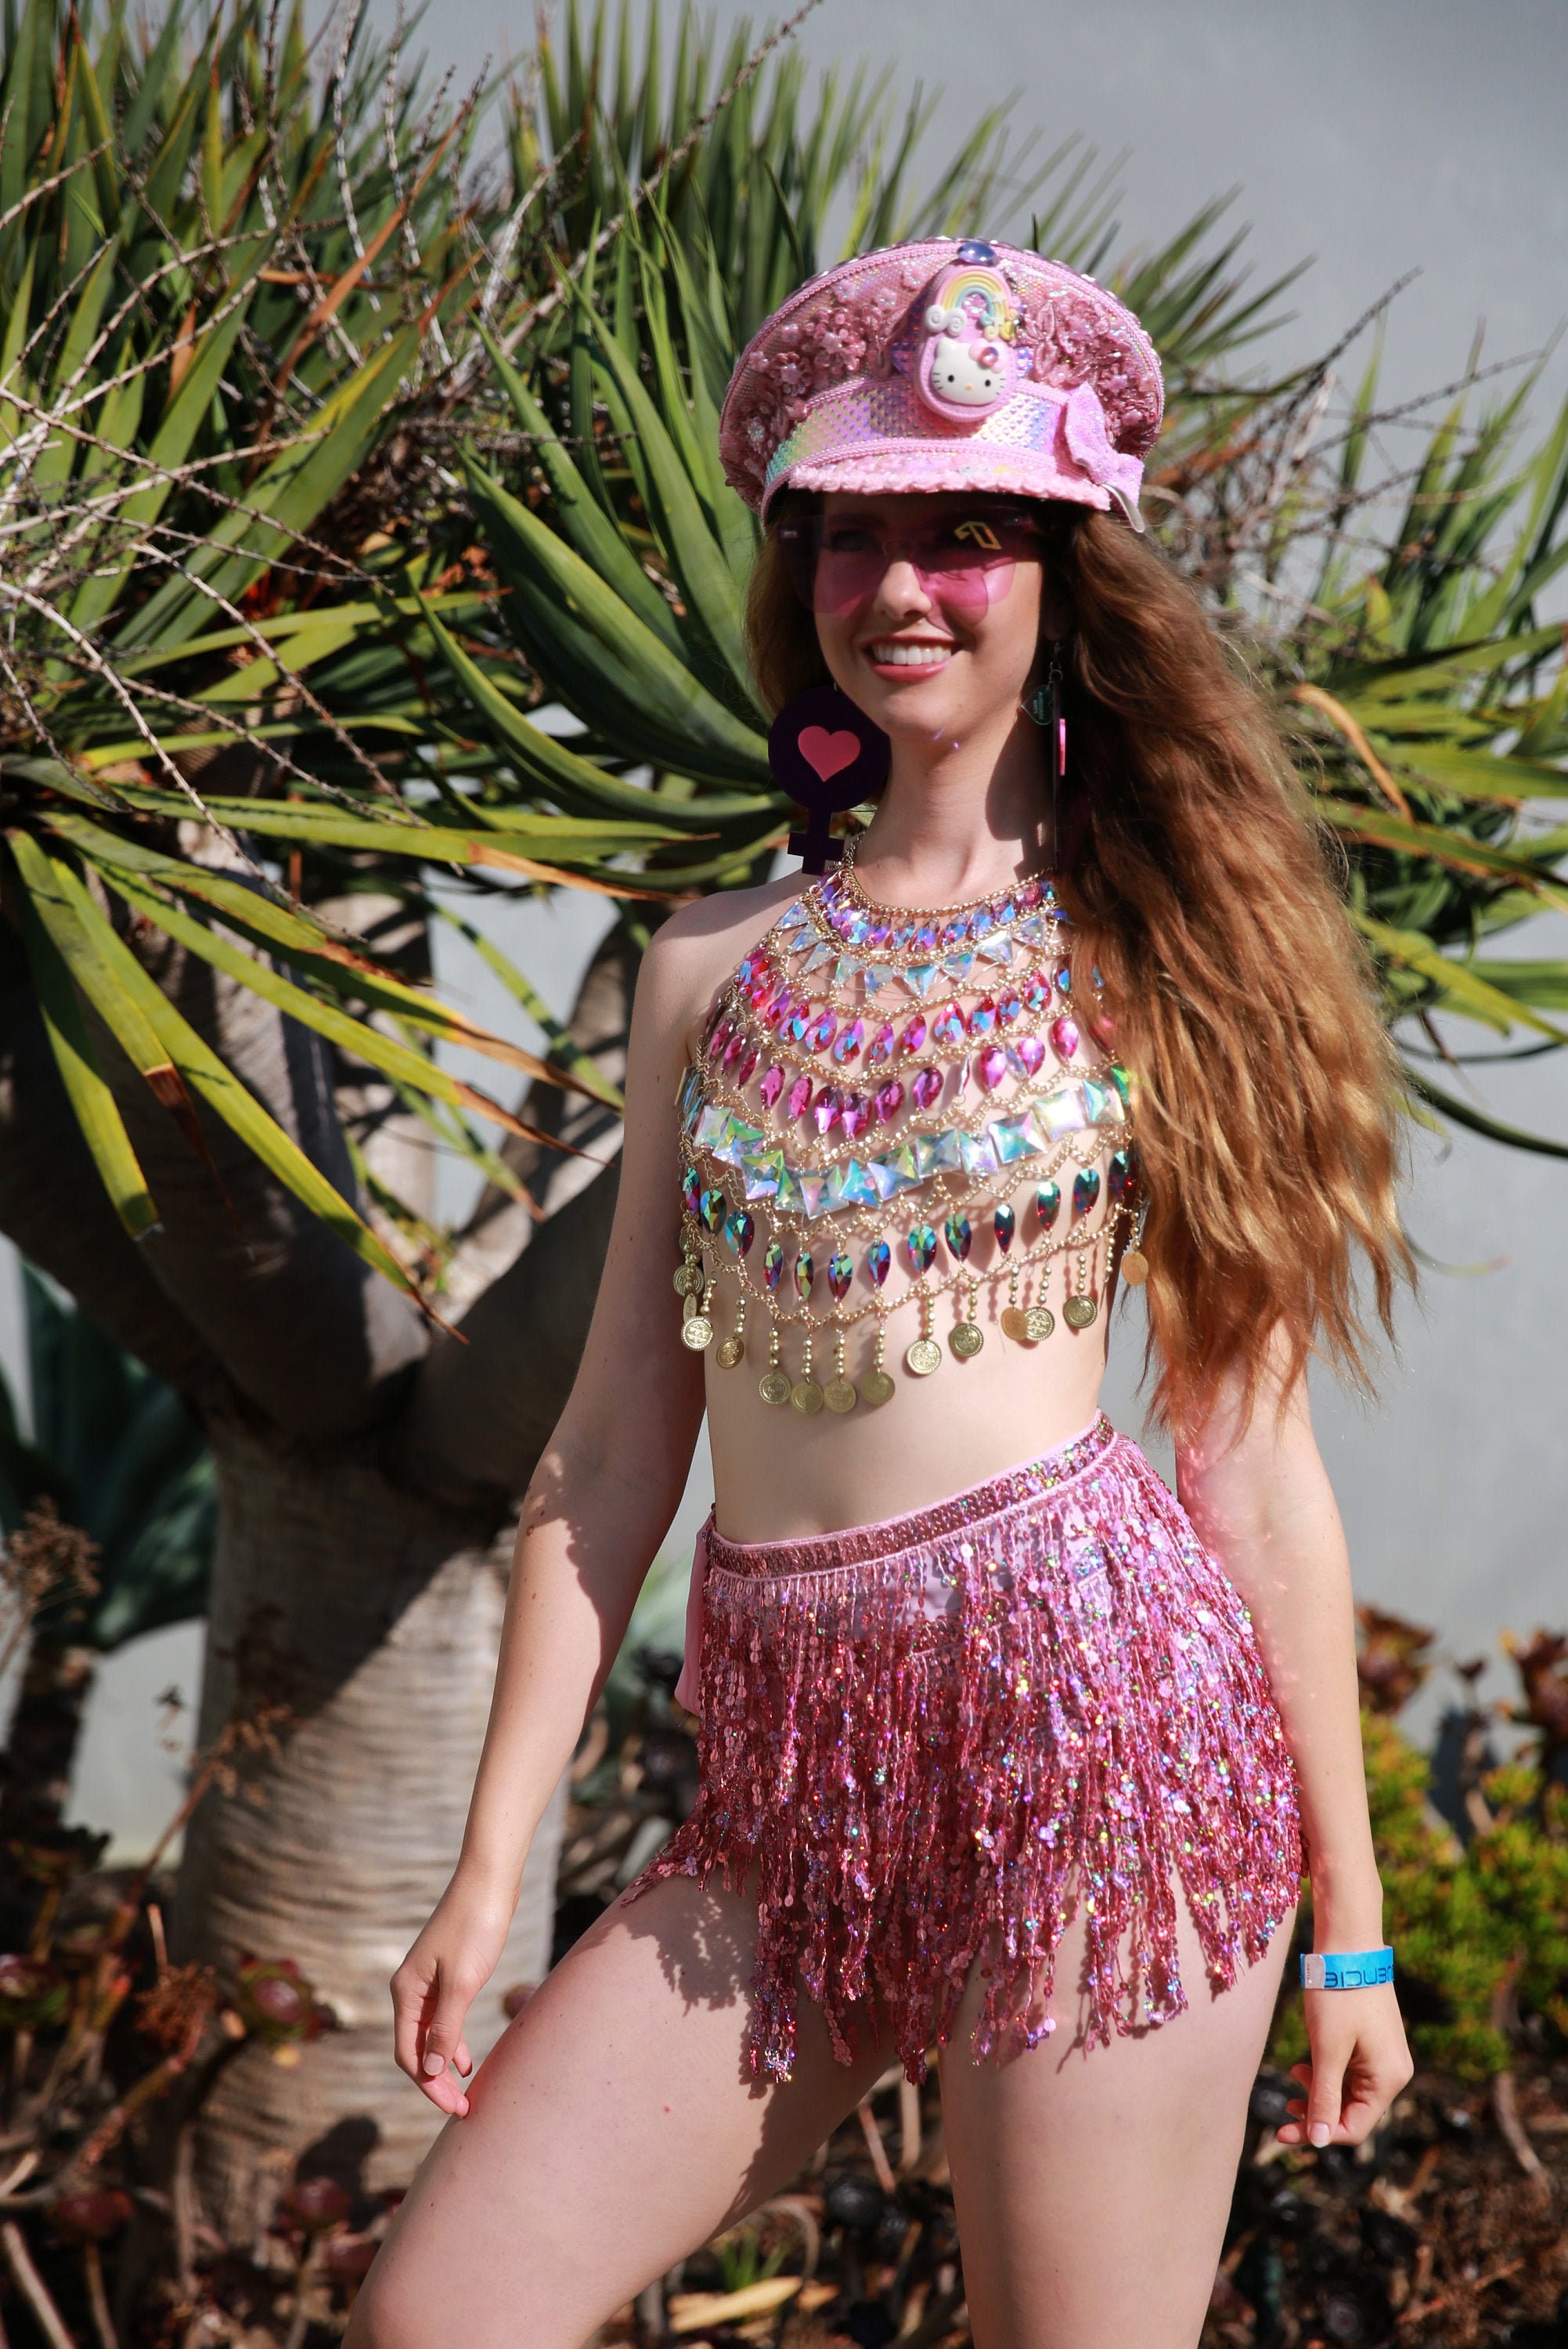 Buy Princess Chain Crop Top, Rave Bra, Edc Outfit Burning Man